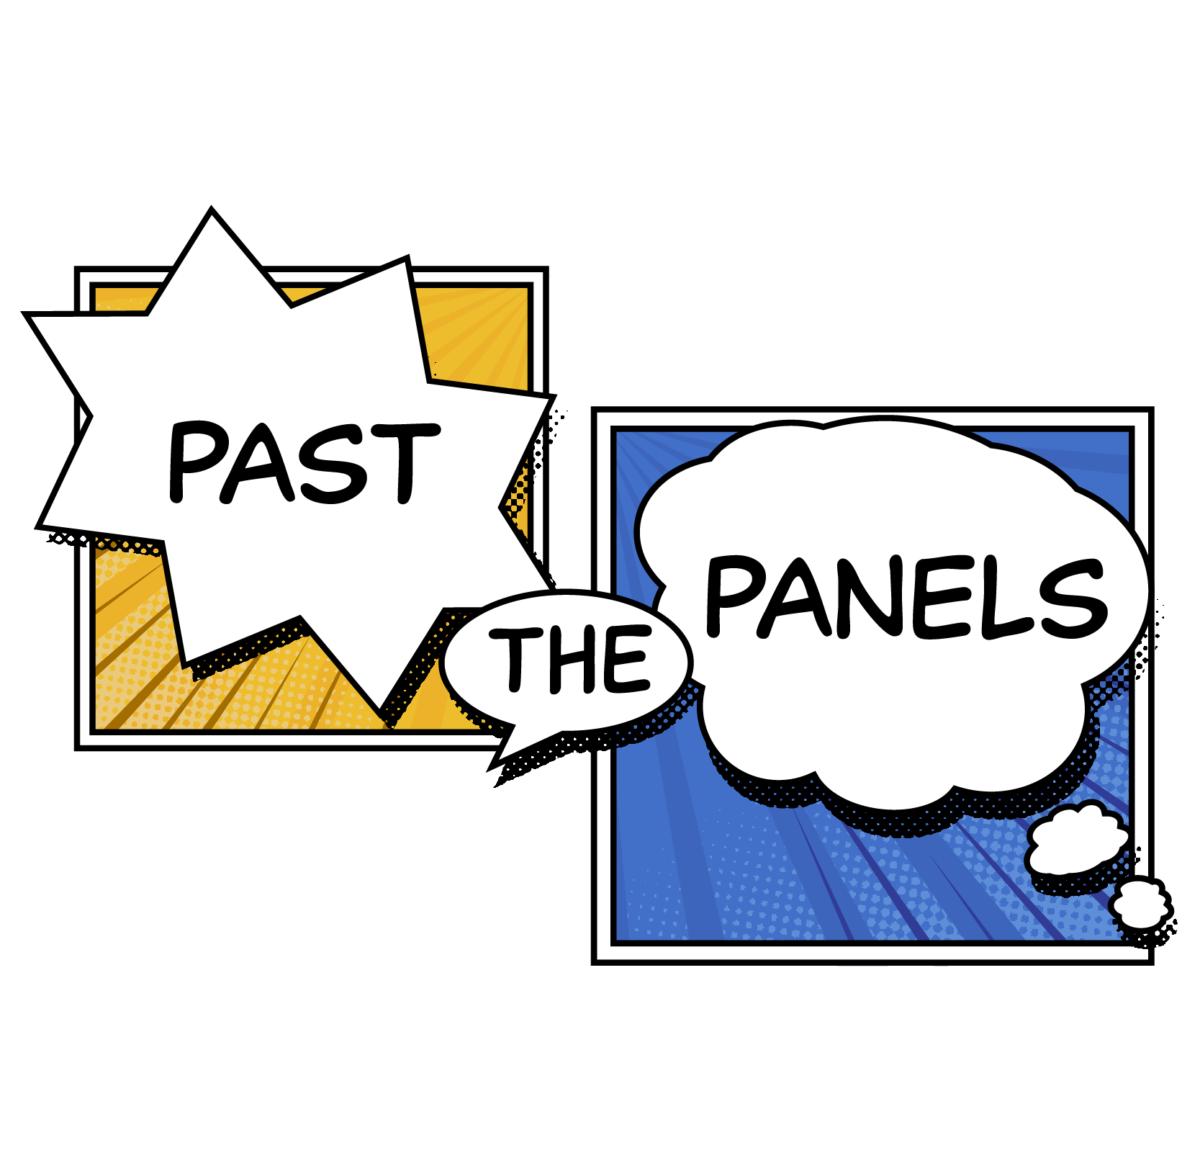 Past the panels logo